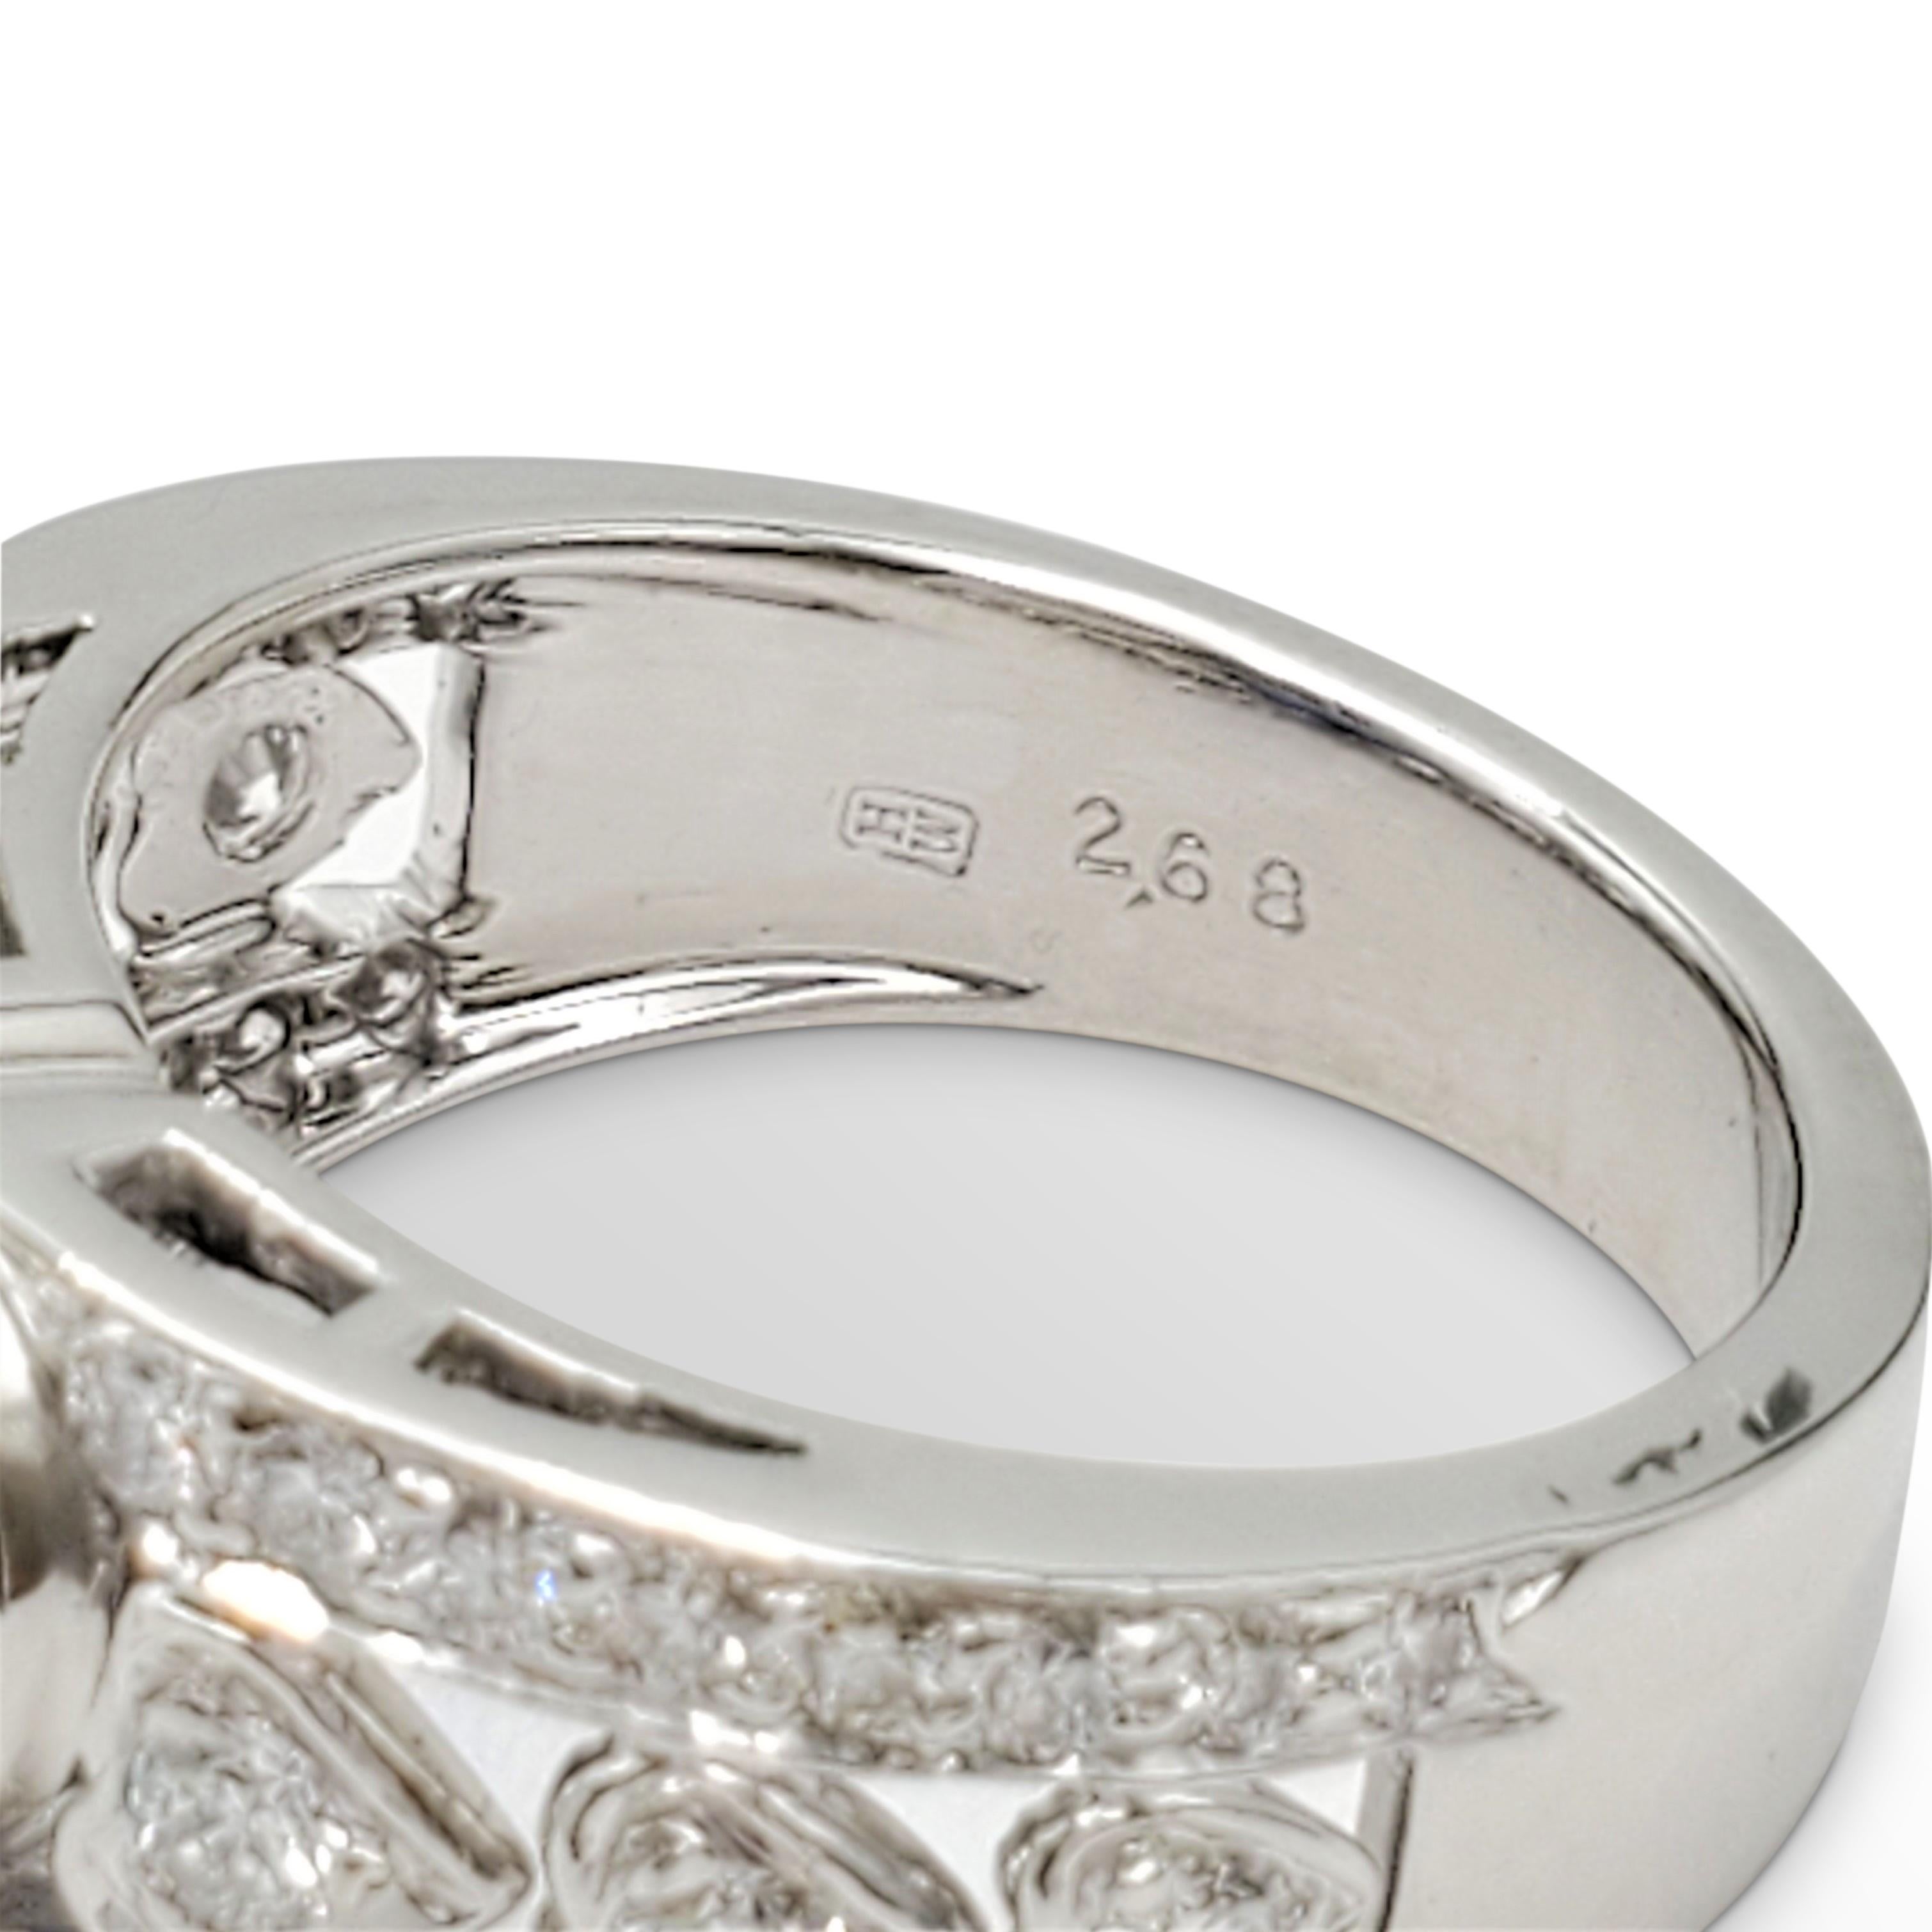 harry winston sapphire ring price